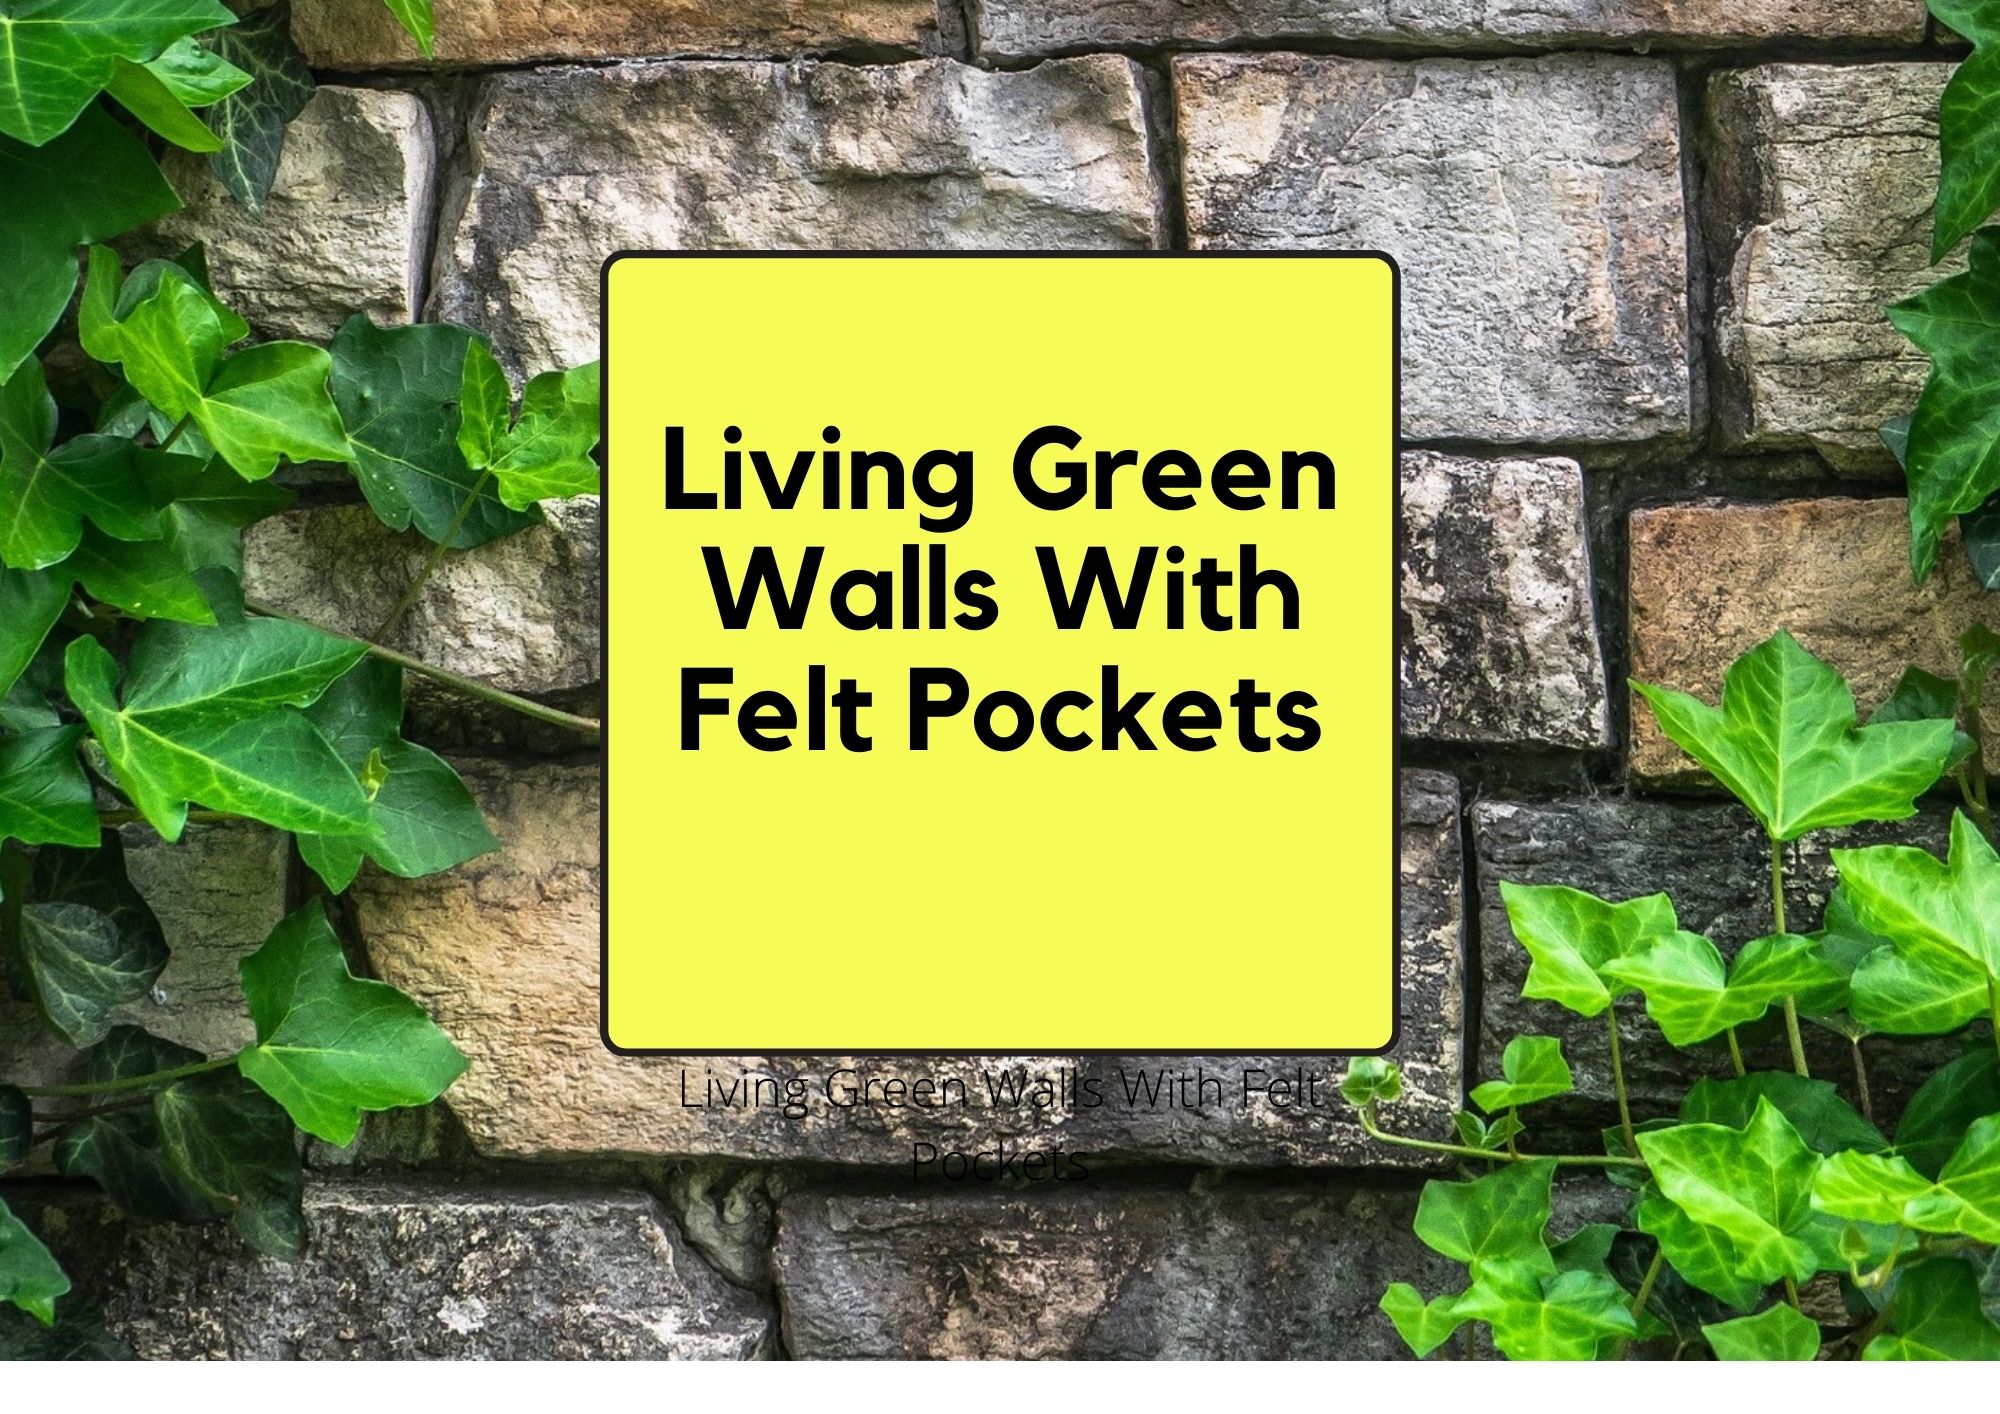 Living Green Walls With Felt Pockets